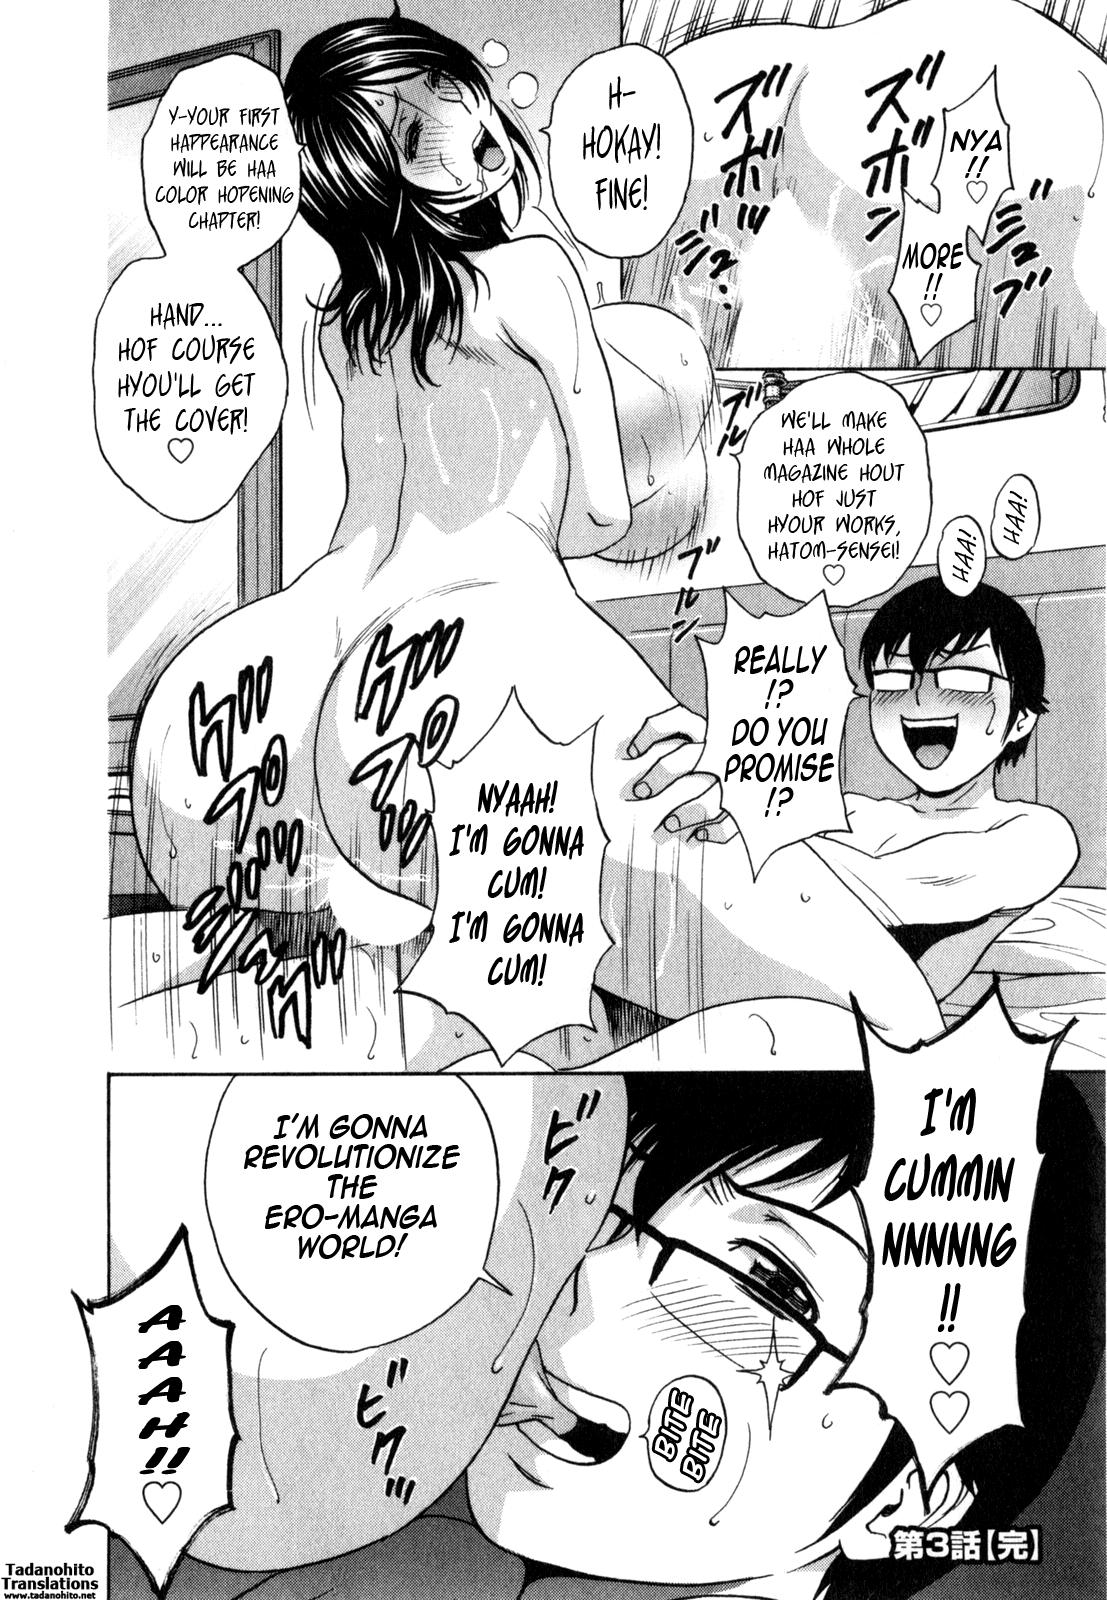 [Hidemaru] Life with Married Women Just Like a Manga 3 - Ch. 1-5 [English] {Tadanohito} 63